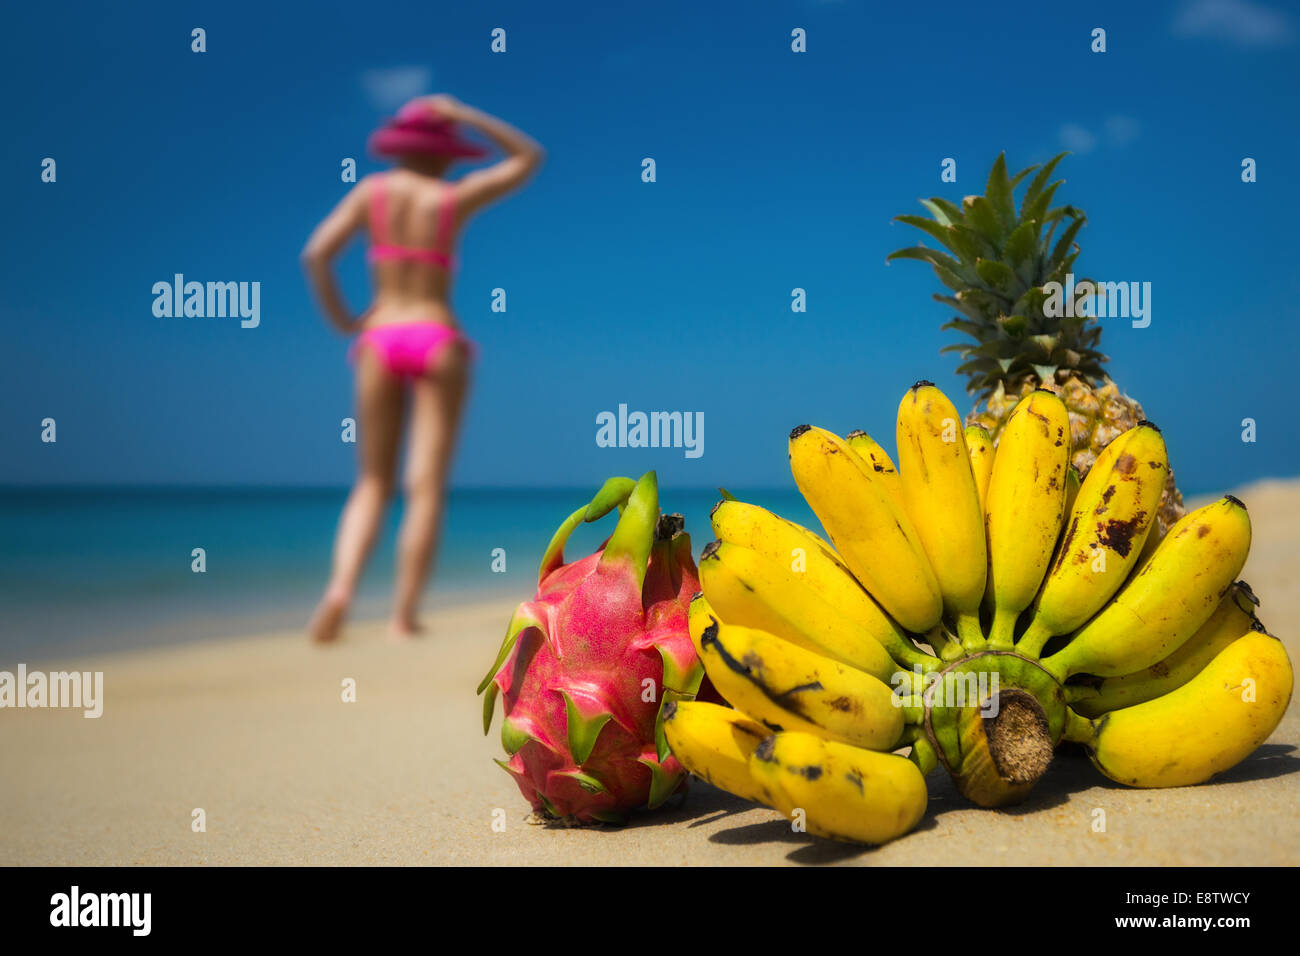 Tropical fruits and a woman in a bikini sunbathing on the beach on sea background. Idealistic scene leisure travel. Stock Photo